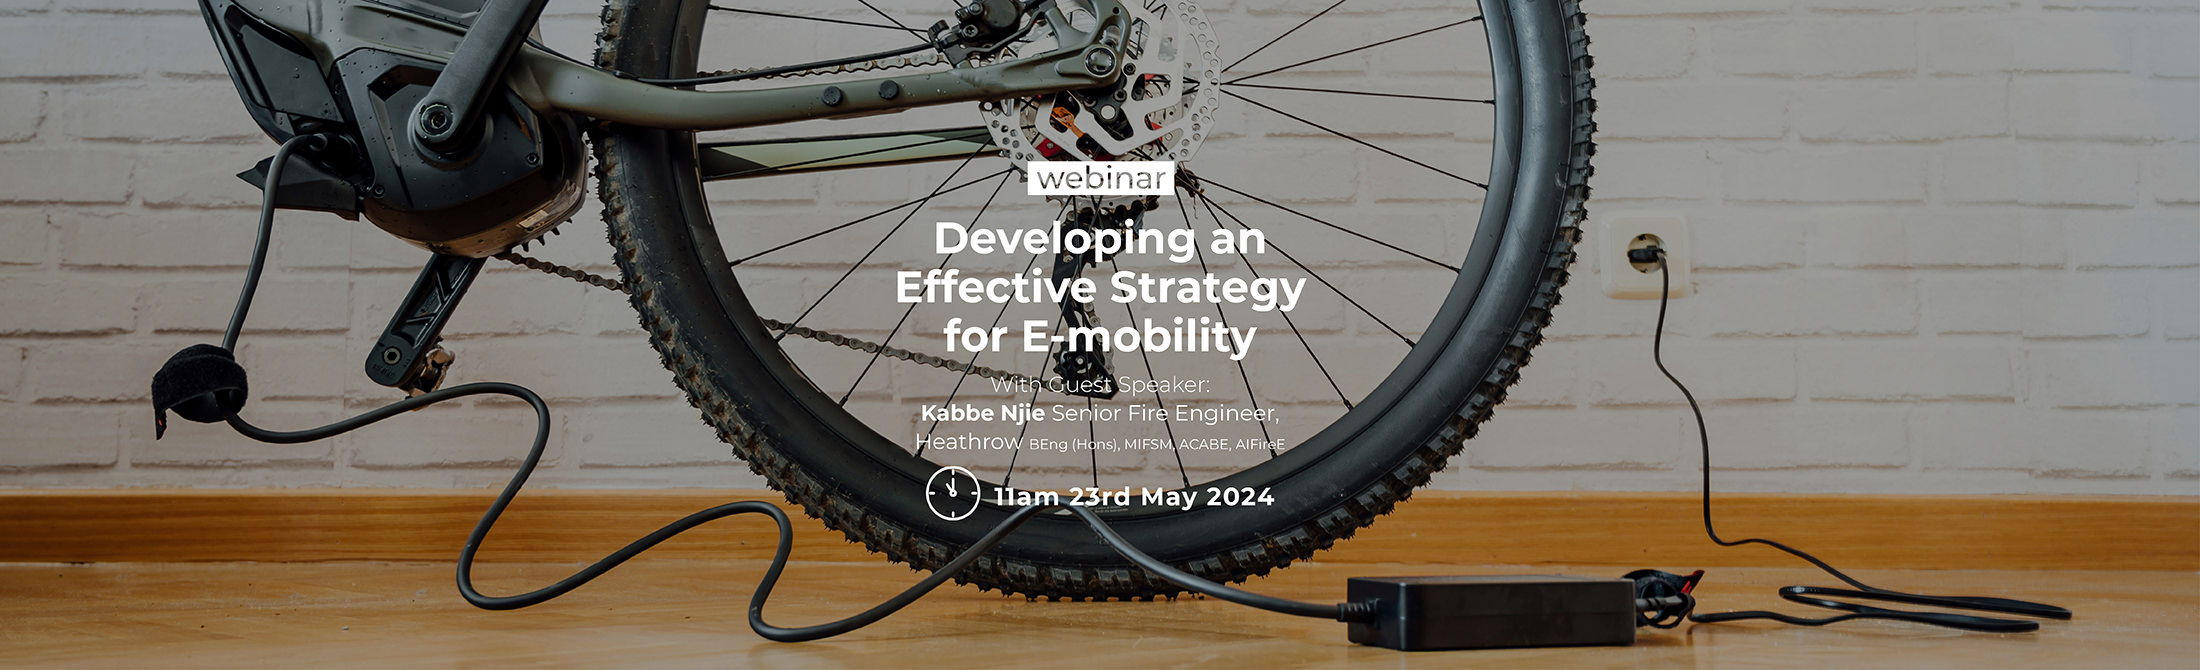 E-mobility webinar: Developing an Effective E-mobility Strategy